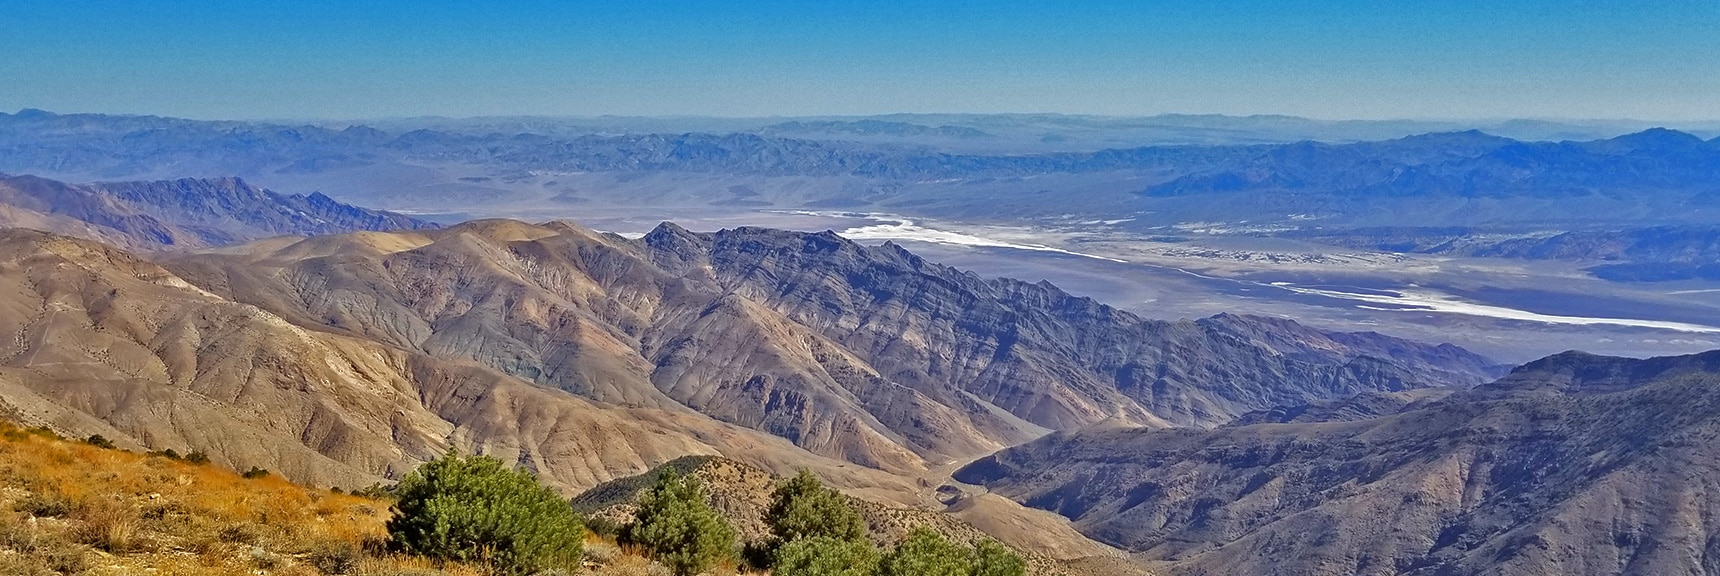 View Northeast to Death Valley from Wildrose Peak Summit | Wildrose Peak | Panamint Mountain Range | Death Valley National Park, California